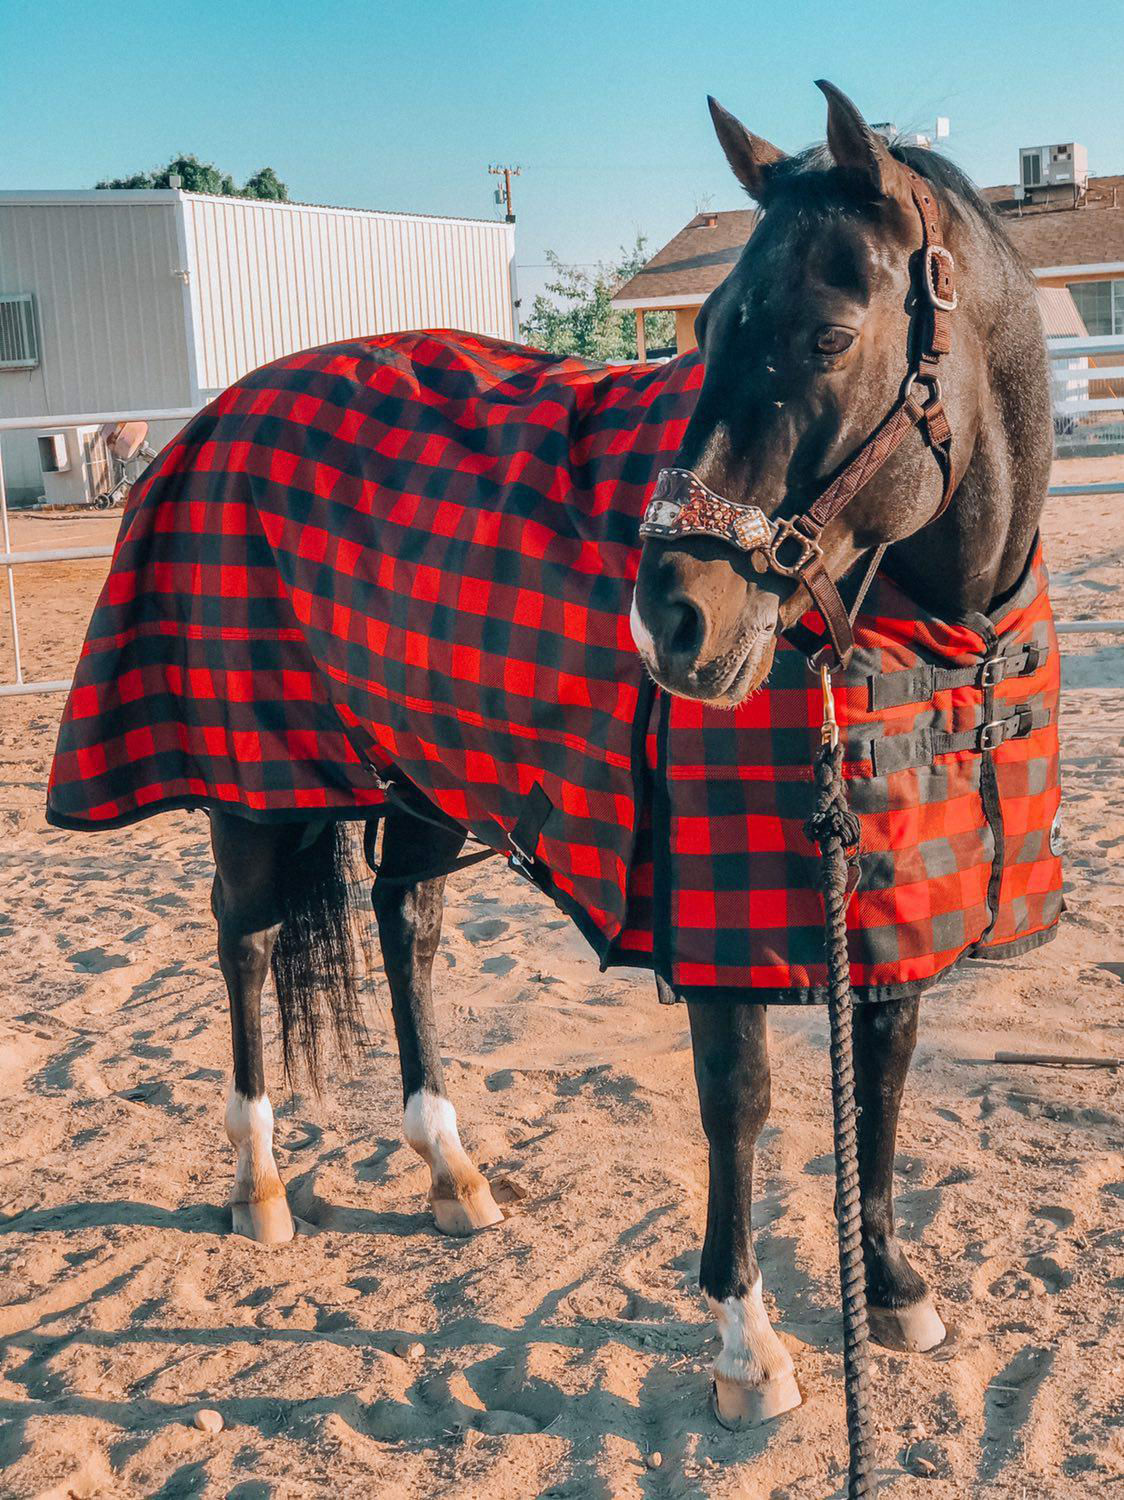 Removable Adjustable Elastic Leg Straps for Horse Blankets - Pair